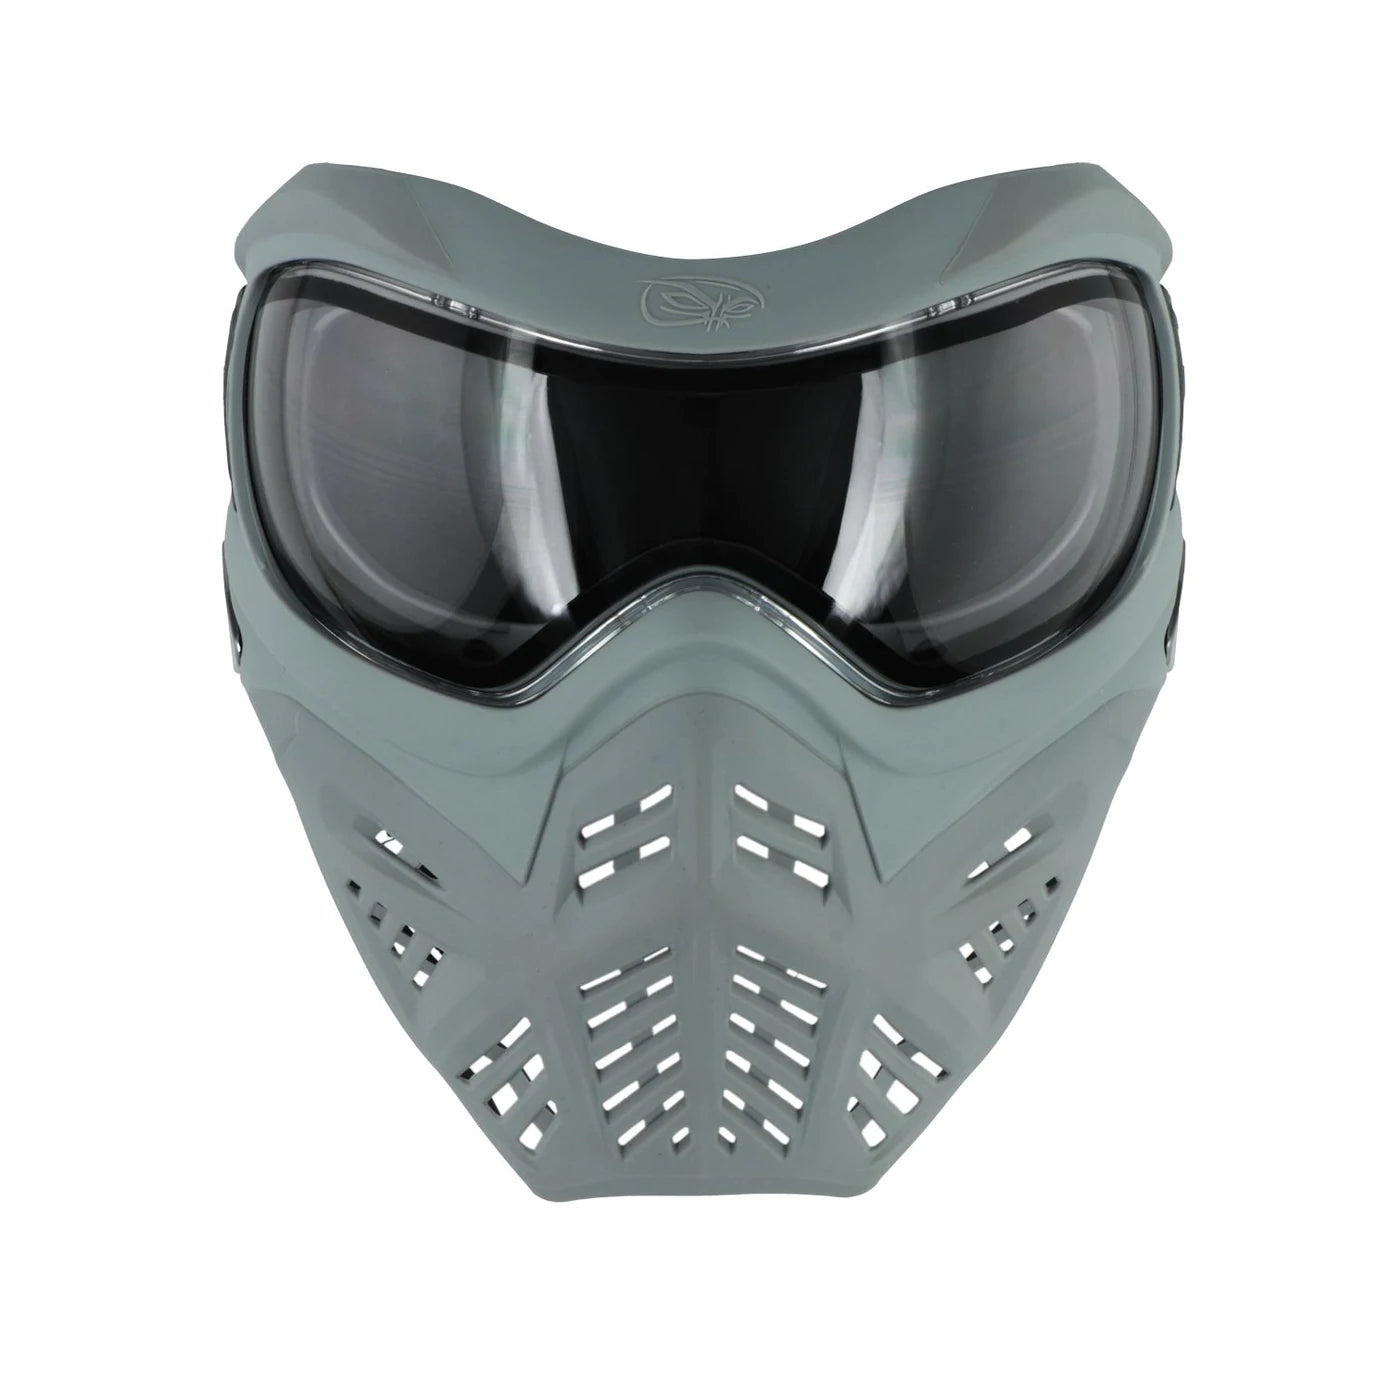 Vforce Grill 2.0 Shark Paintball Mask